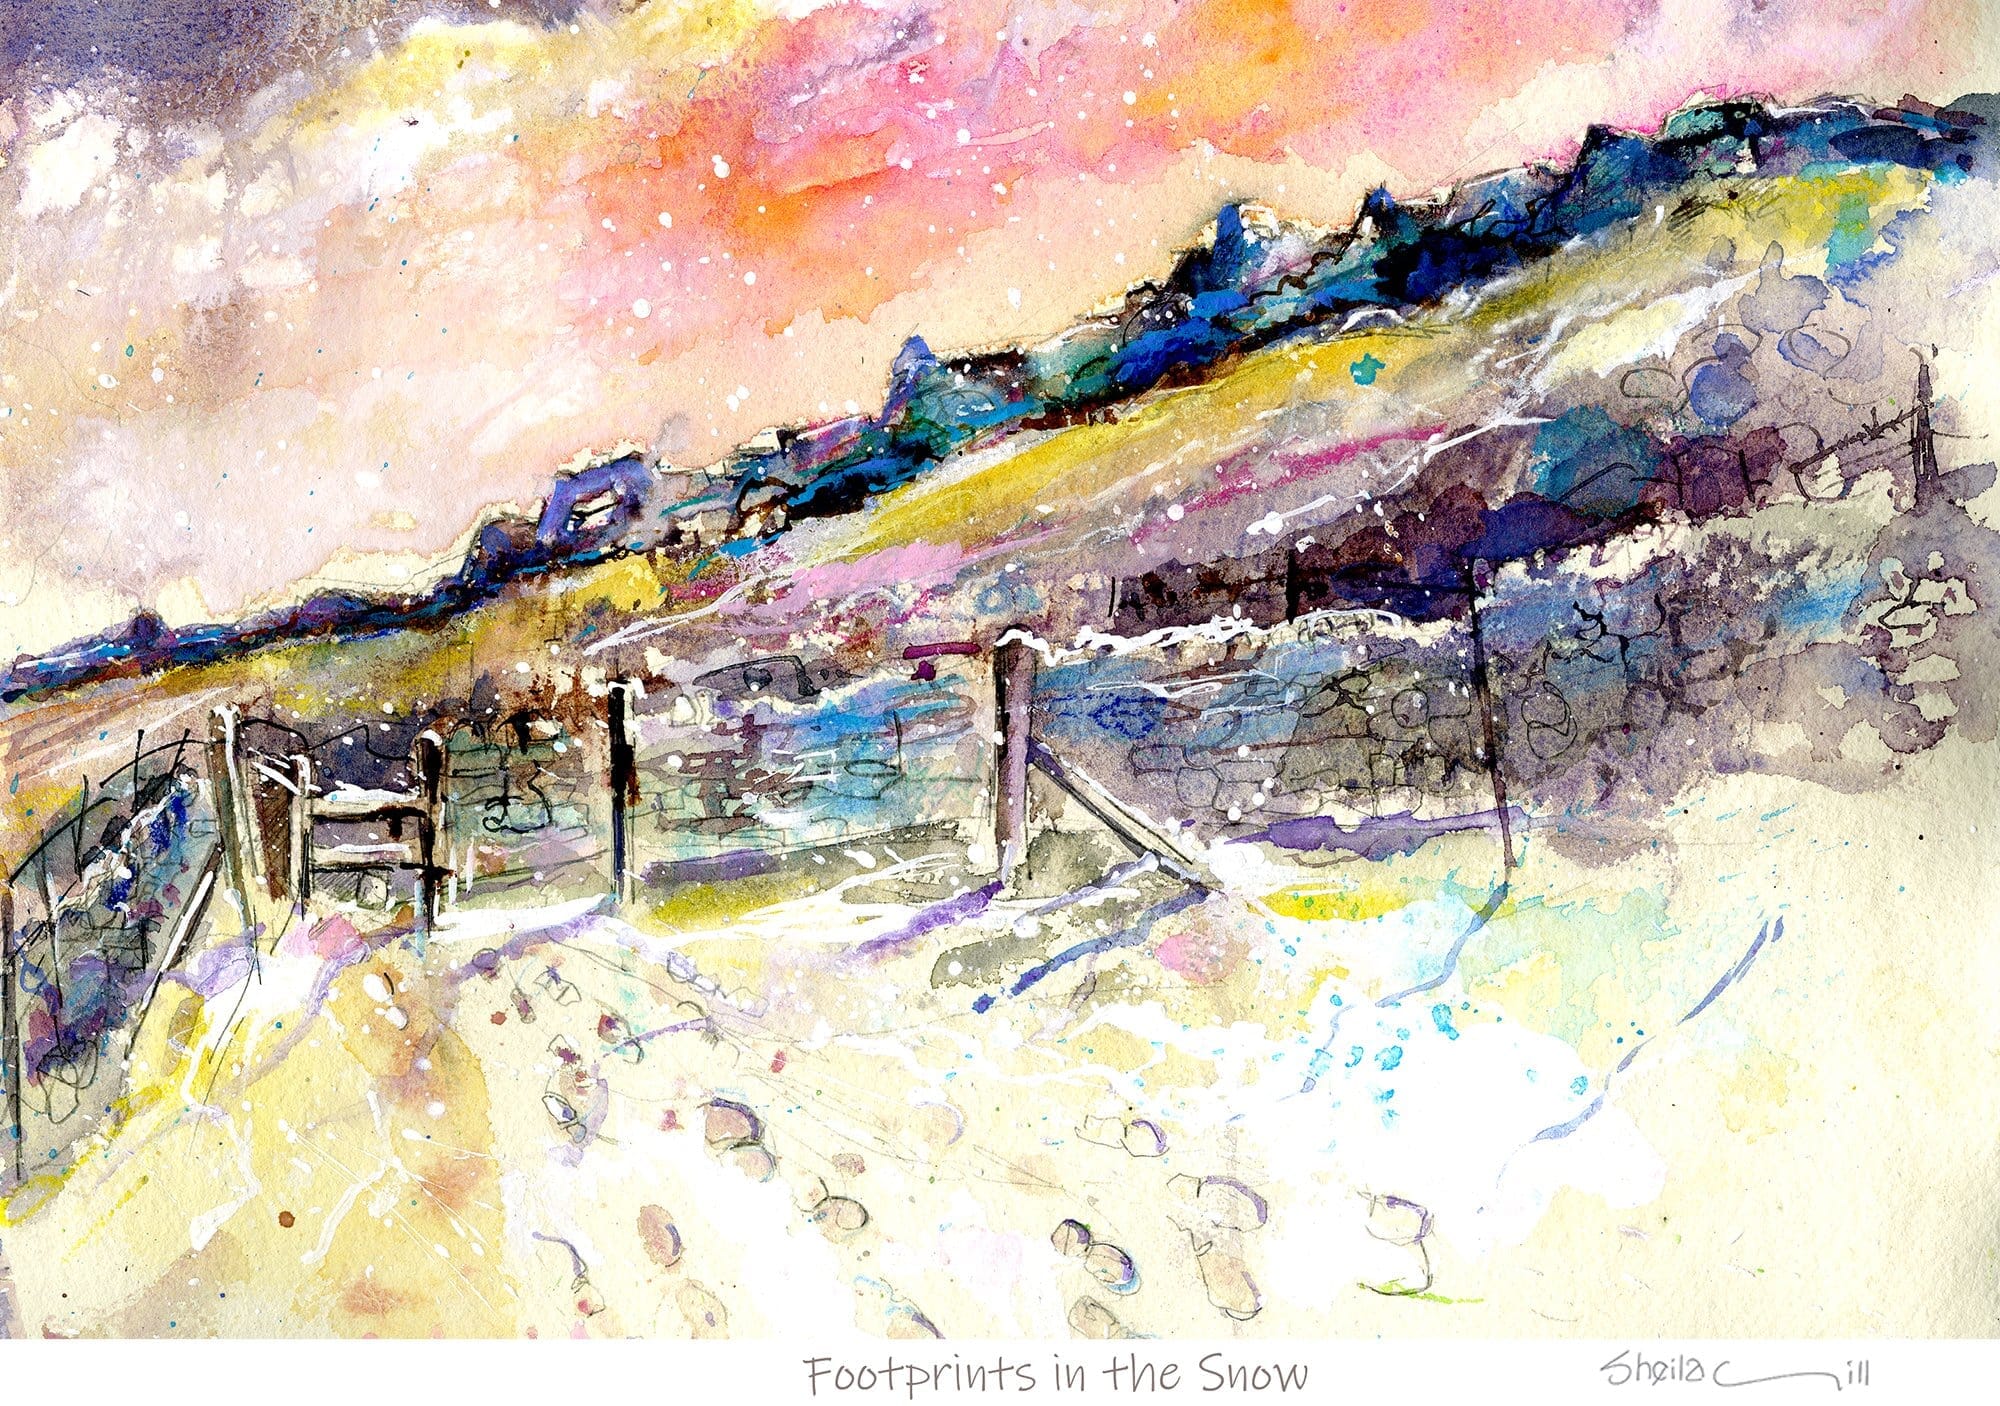 Snow on Curbar Edge, Derbyshire Landscape - Watercolour Landscape Art Print by artist Sheila Gill
